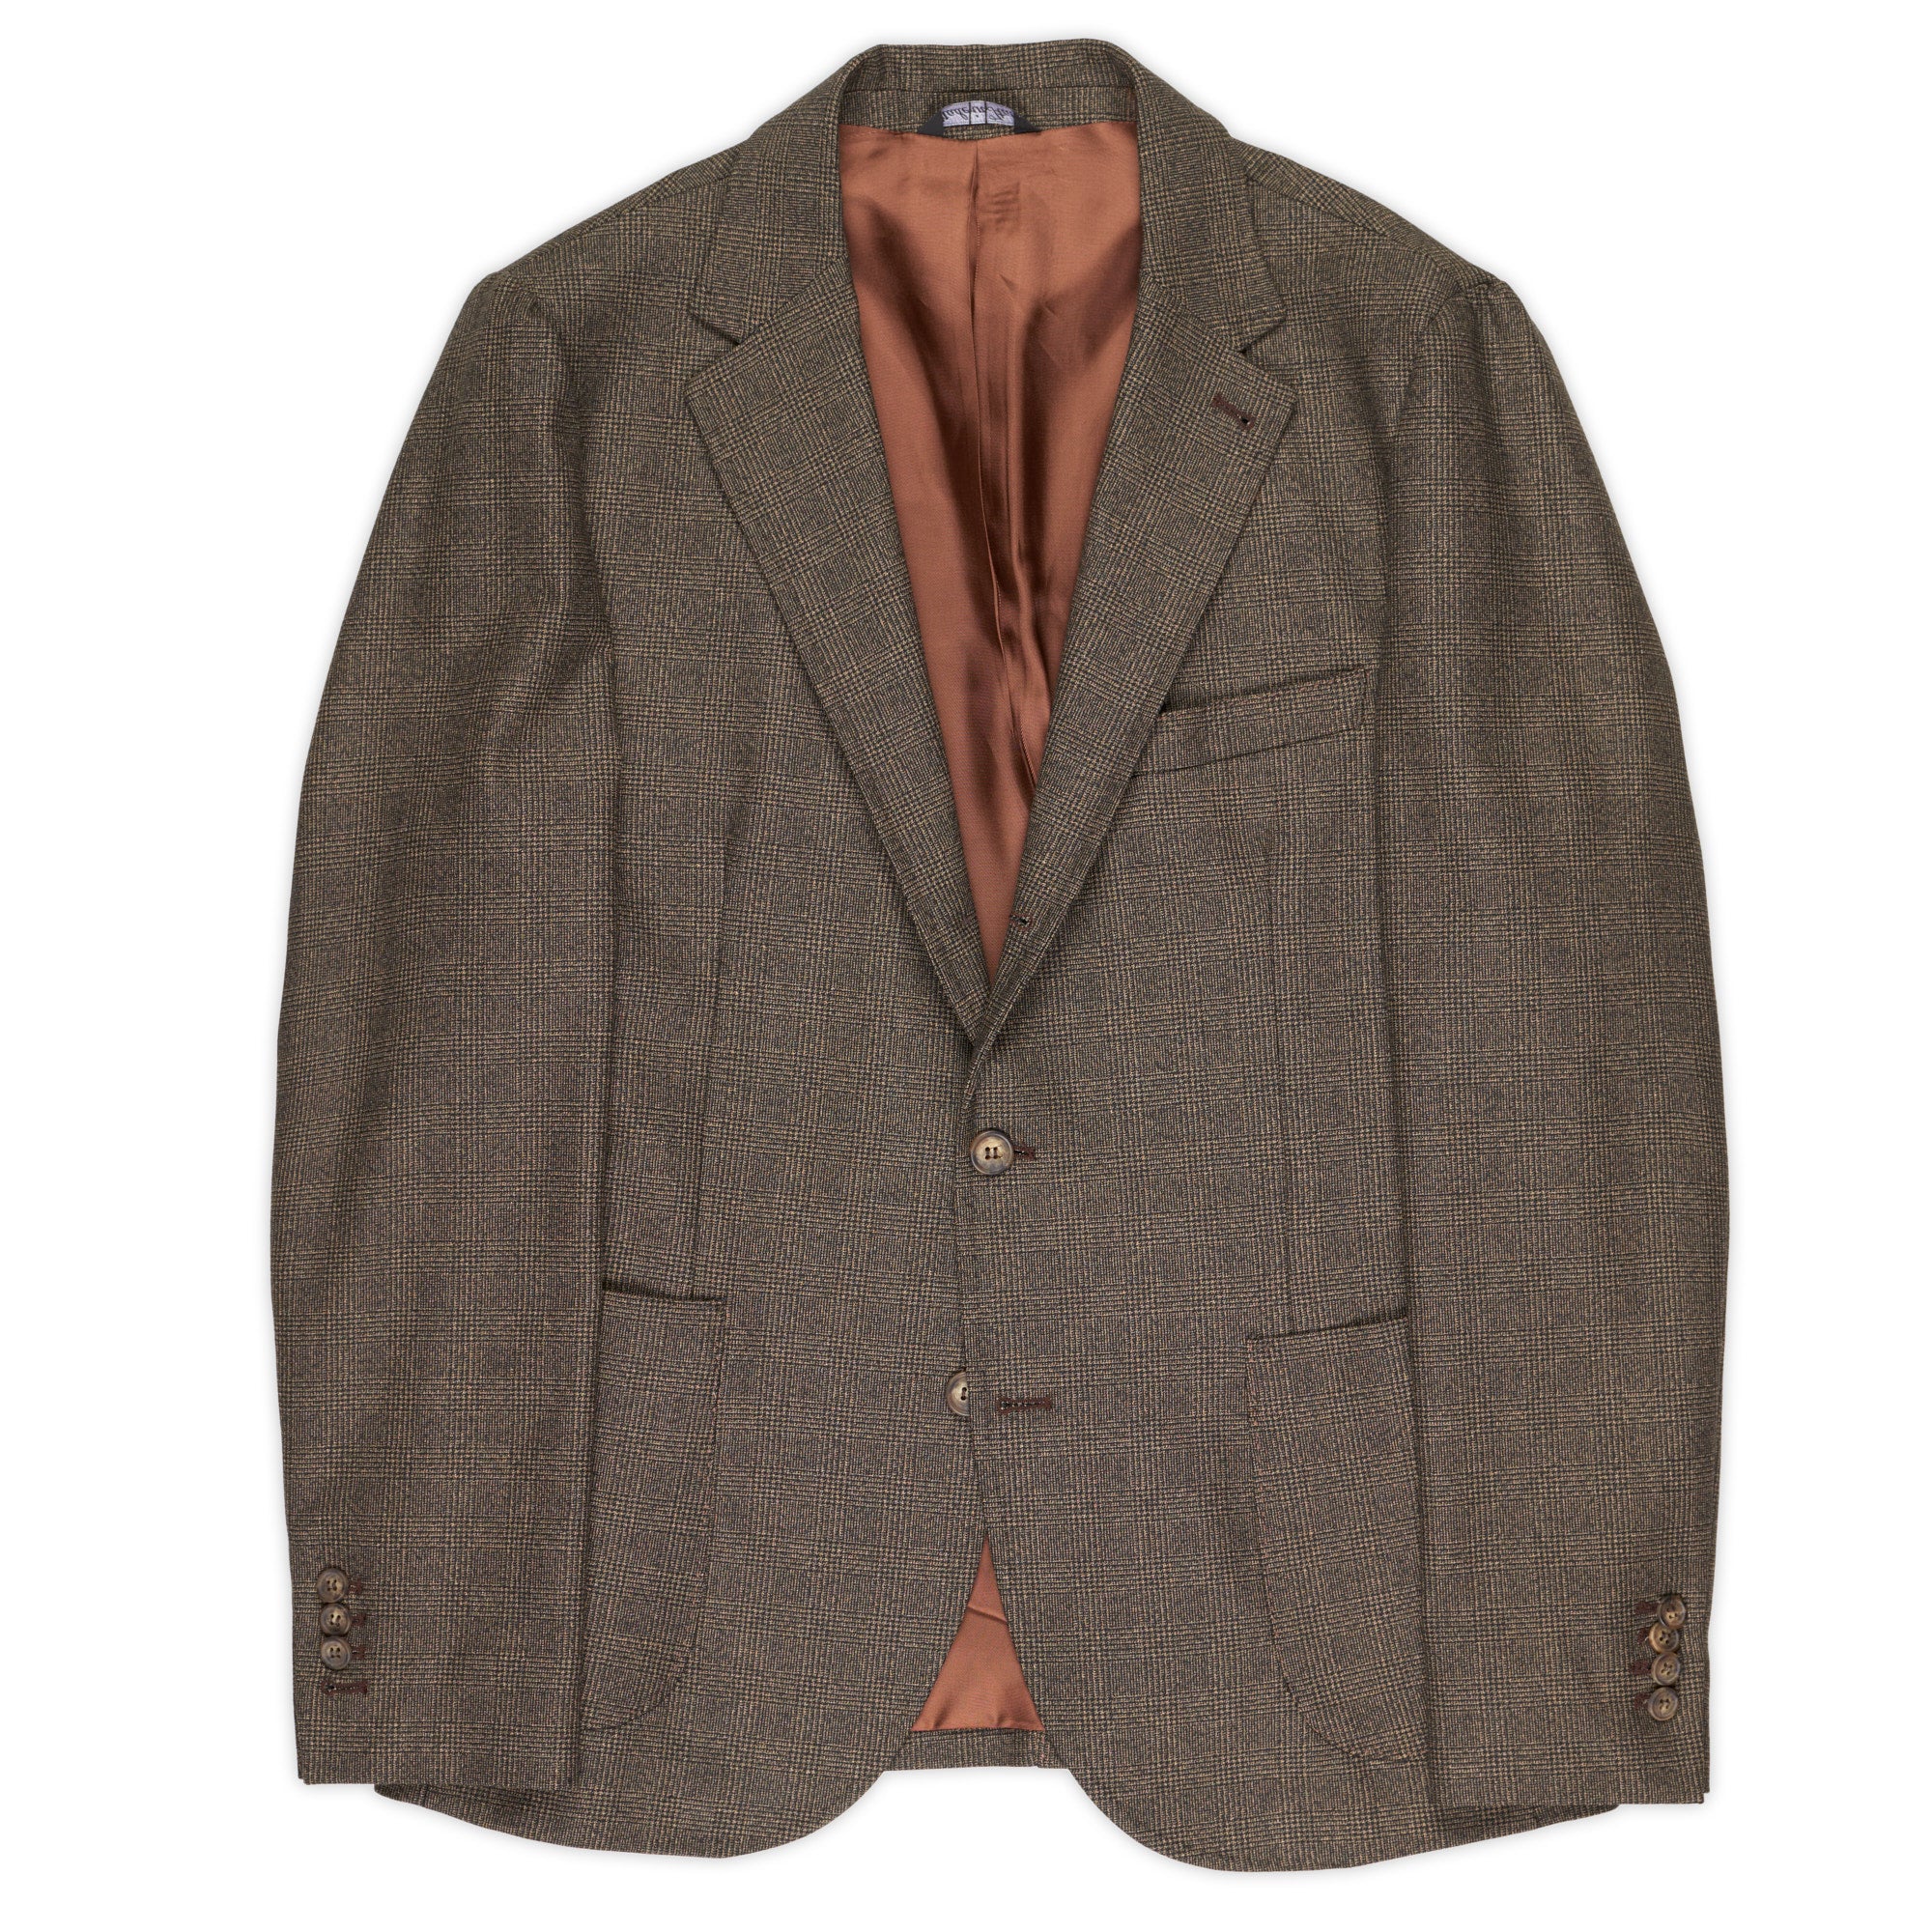 VINCENZO PALUMBO "Alfred" Brown Plaid Wool Jacket EU 52 NEW US 40-42 Slim Fit